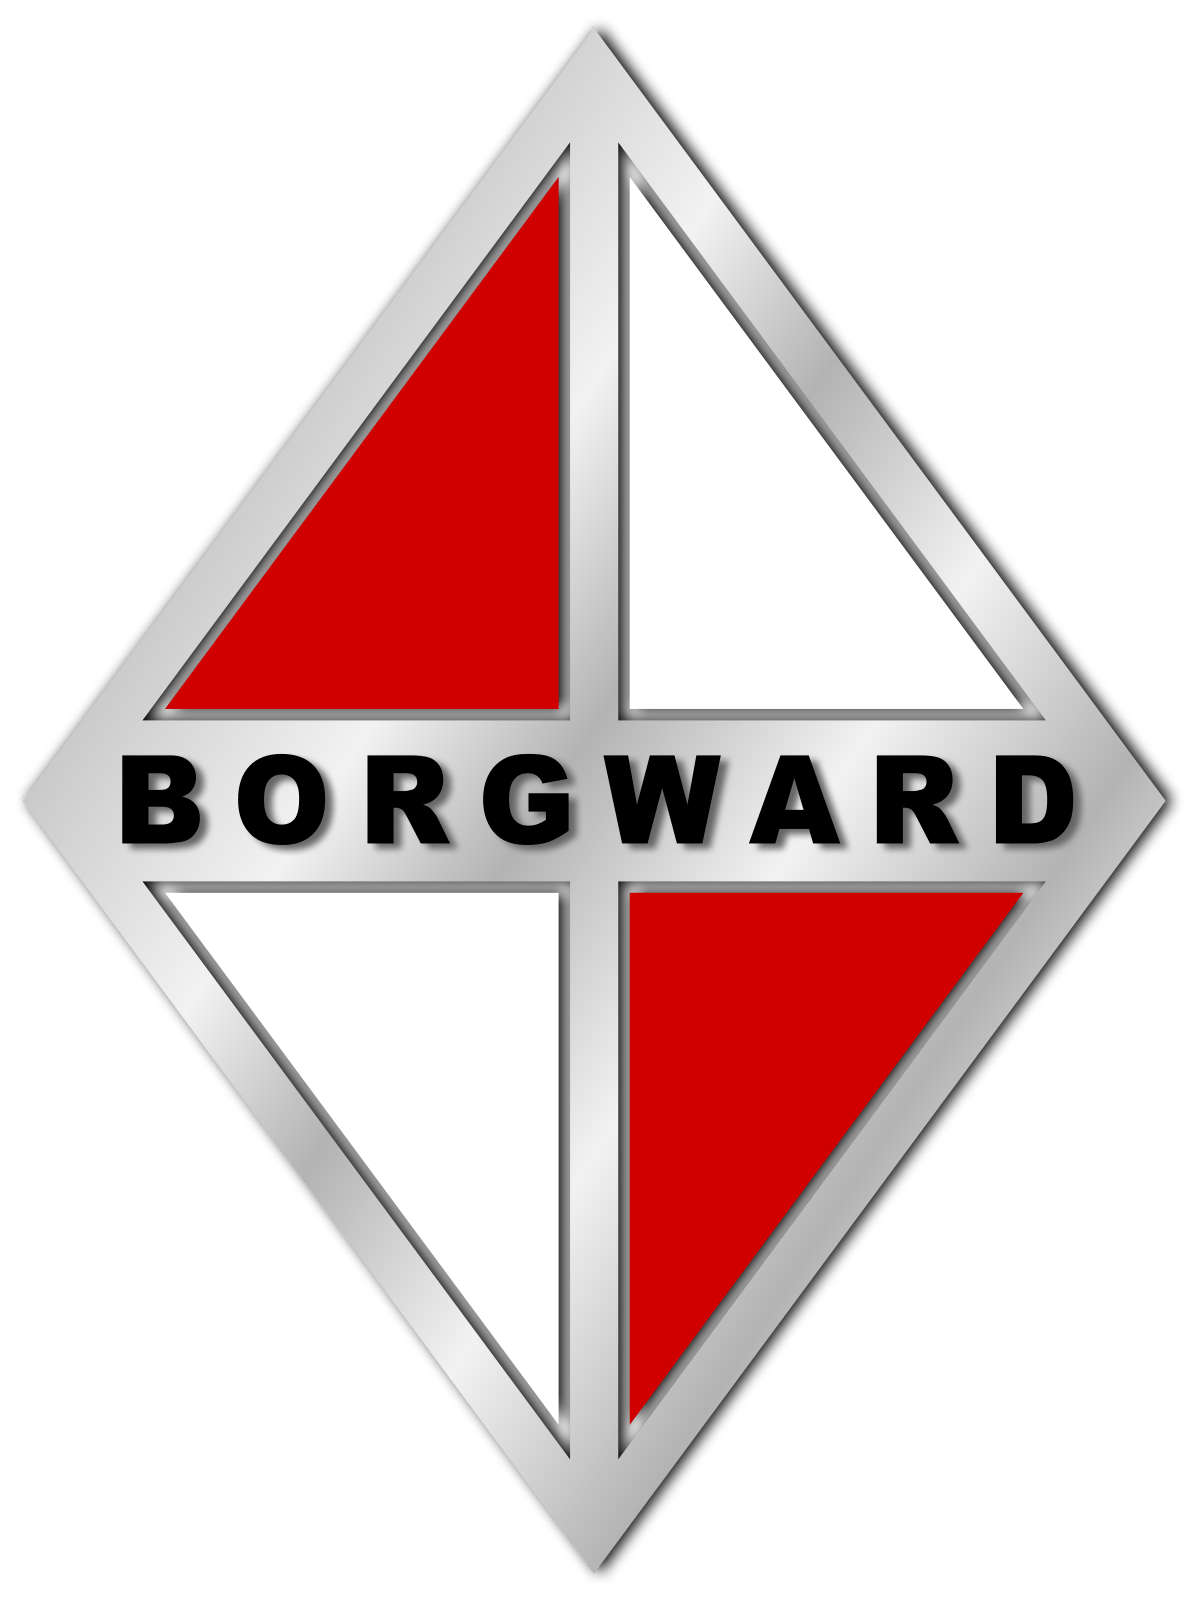 Triangle Car Logo - Borgward auto logo | 170da | Car logos, Logos, Cars